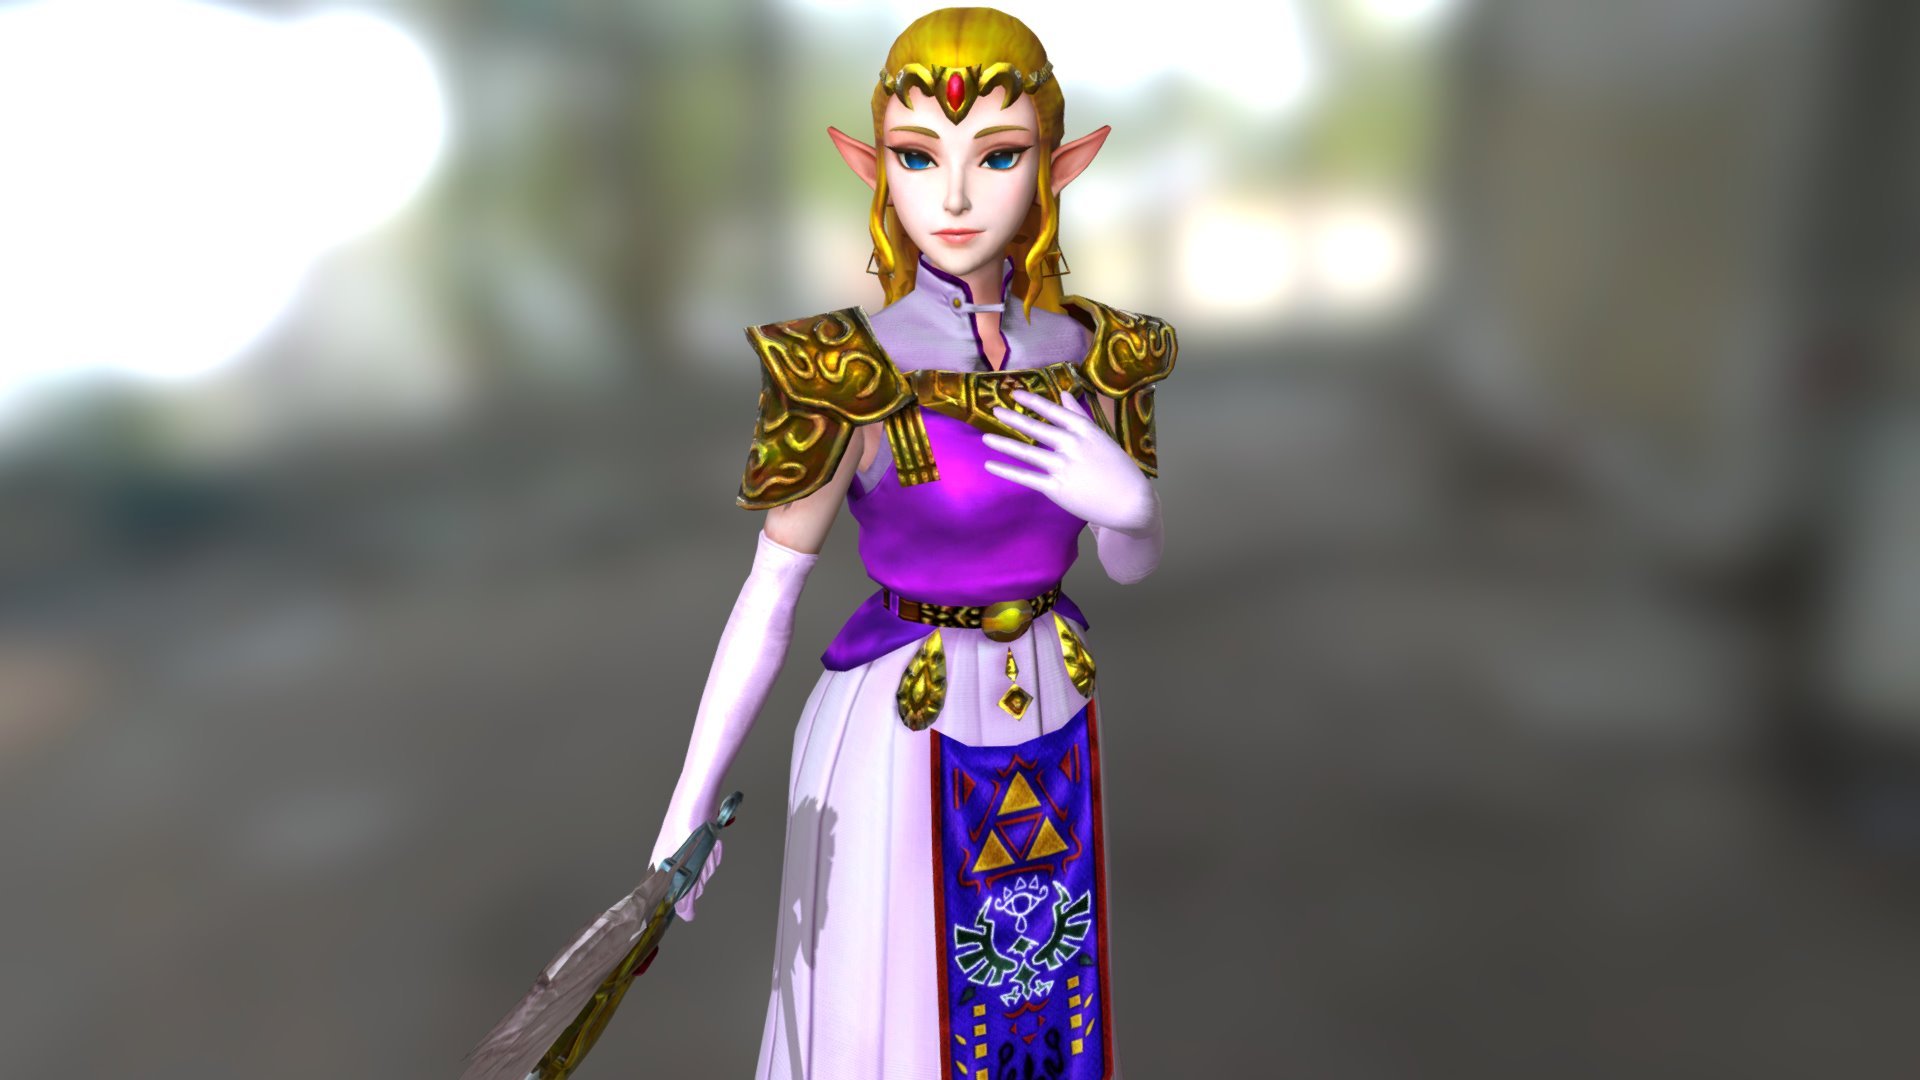 Zelda ocarina of Time 3D en android